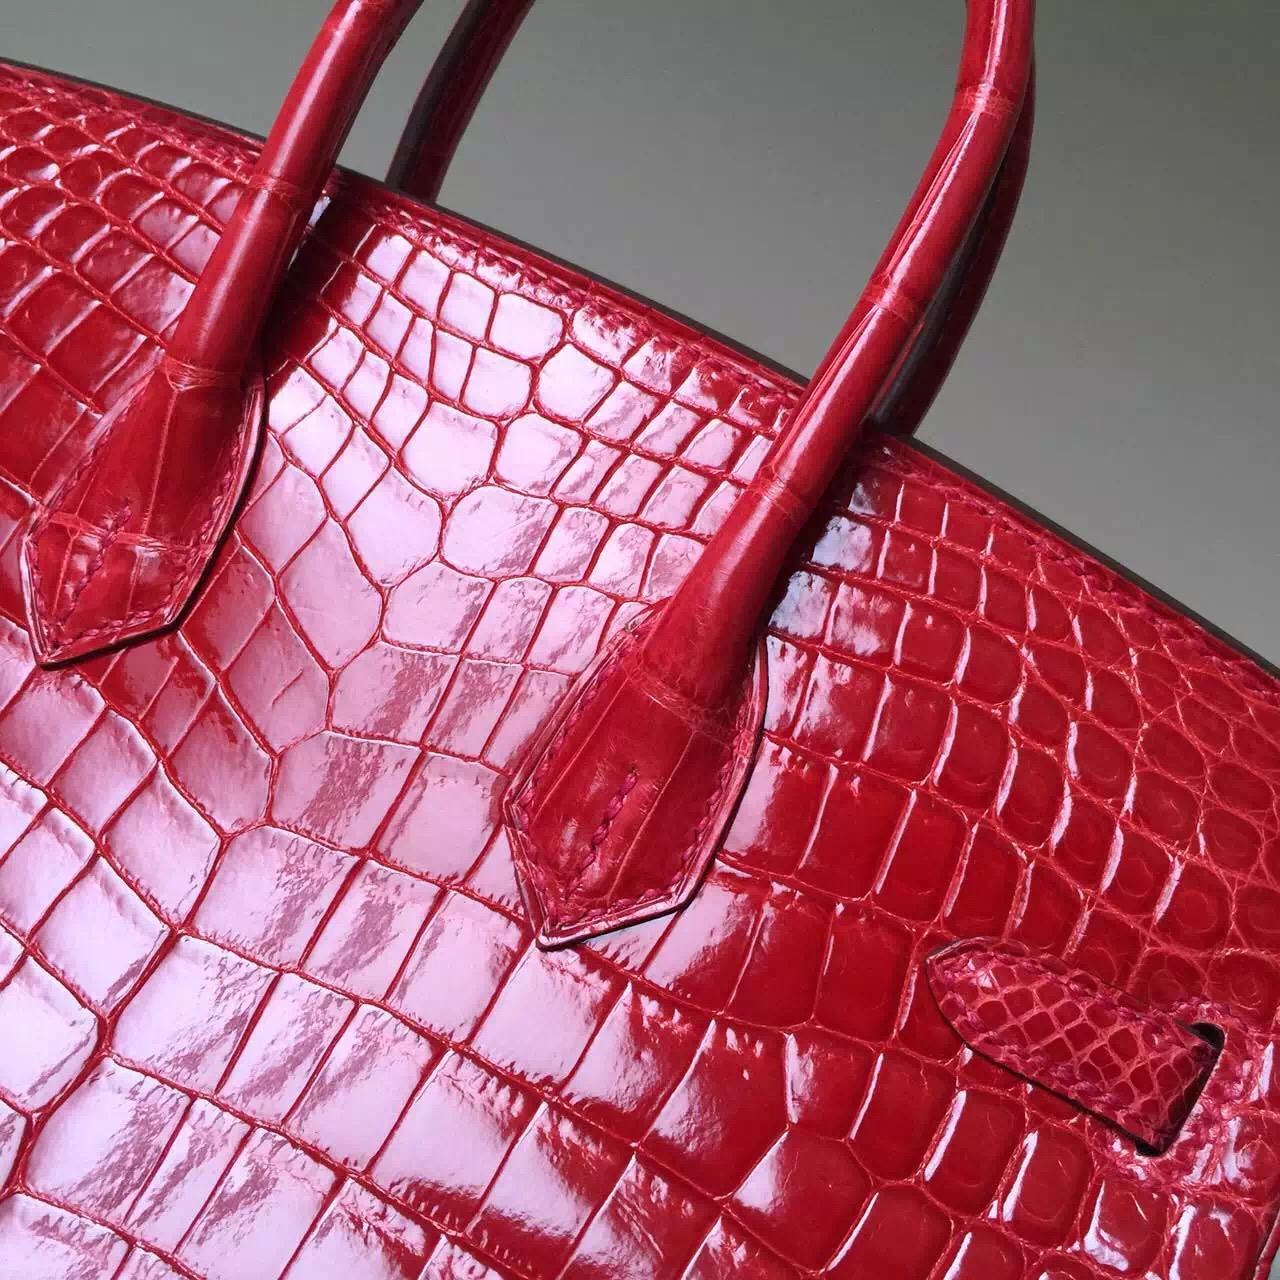 Wholesale Hermes Crocodile Shiny Leather Birkin Bag 25cm in CK95 Ferrari Red